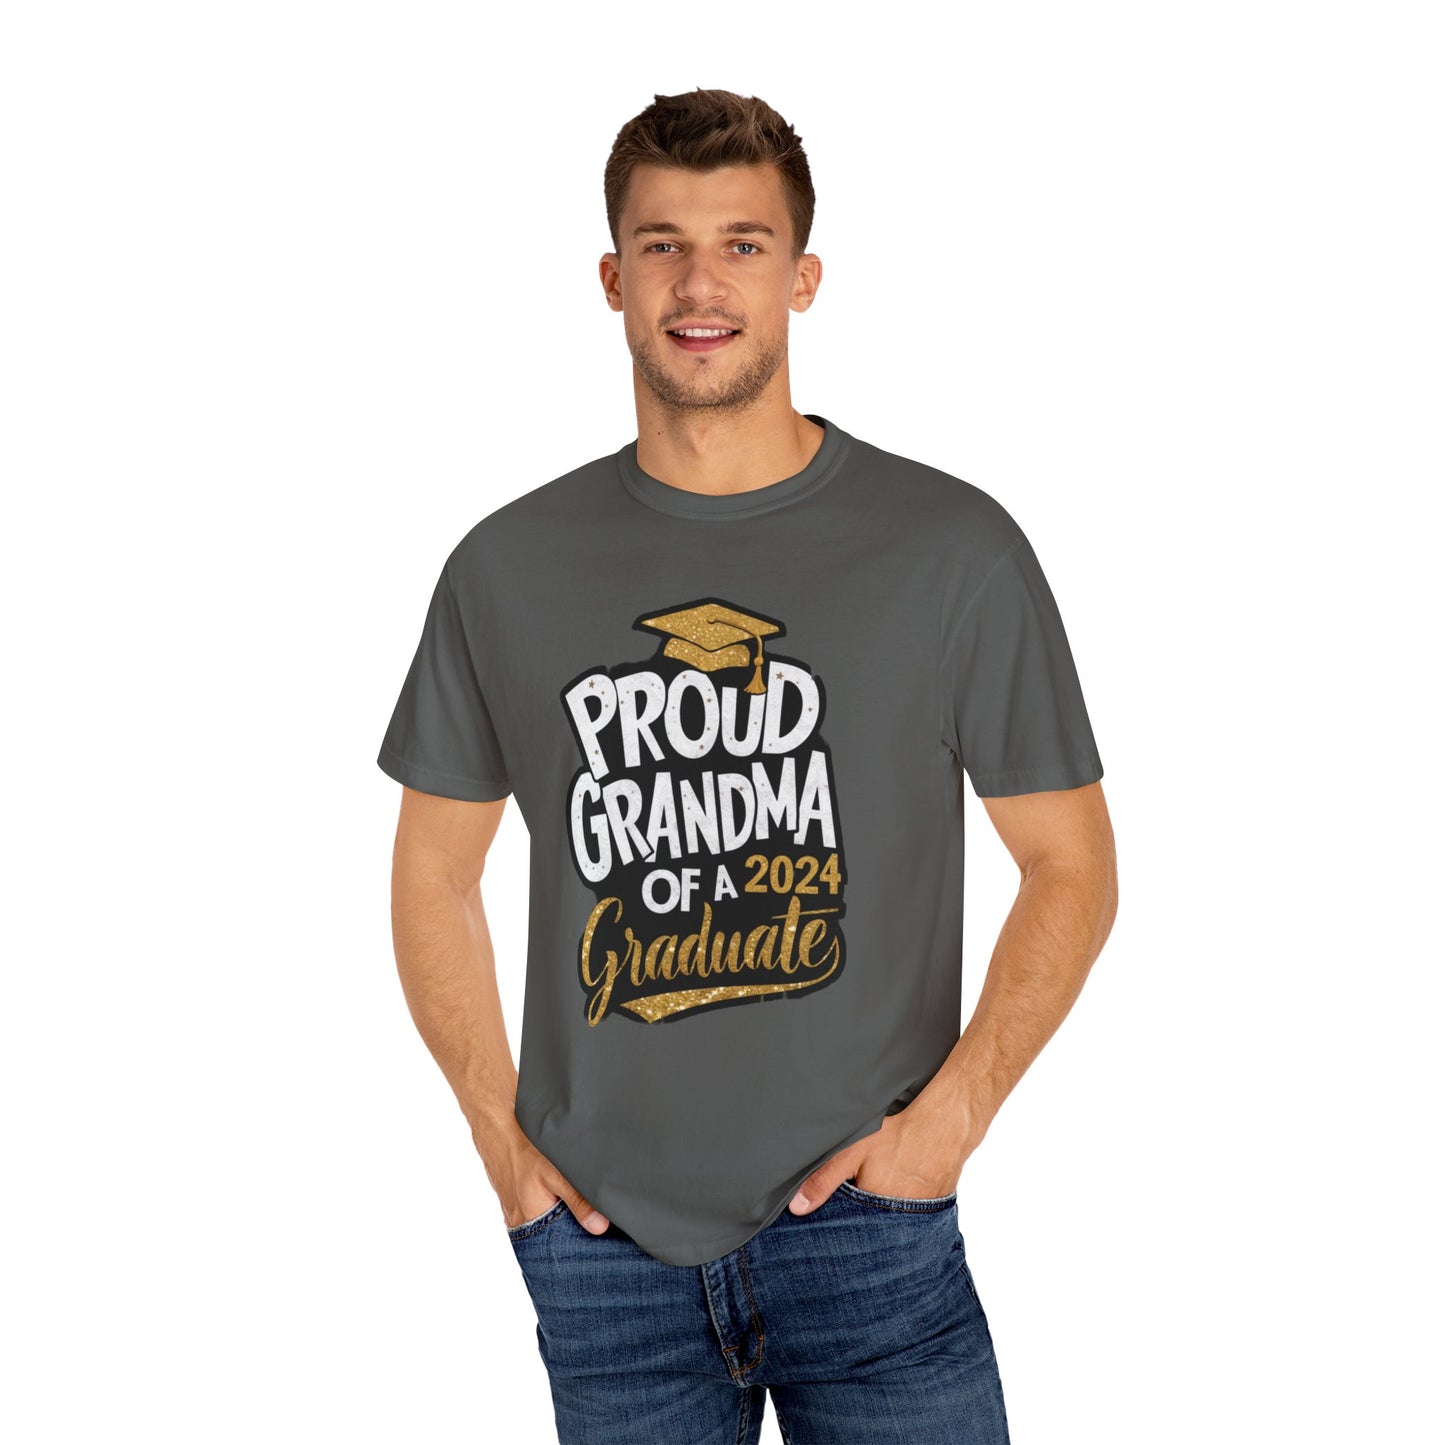 Proud of Grandma 2024 Graduate Unisex Garment-dyed T-shirt Cotton Funny Humorous Graphic Soft Premium Unisex Men Women Pepper T-shirt Birthday Gift-51